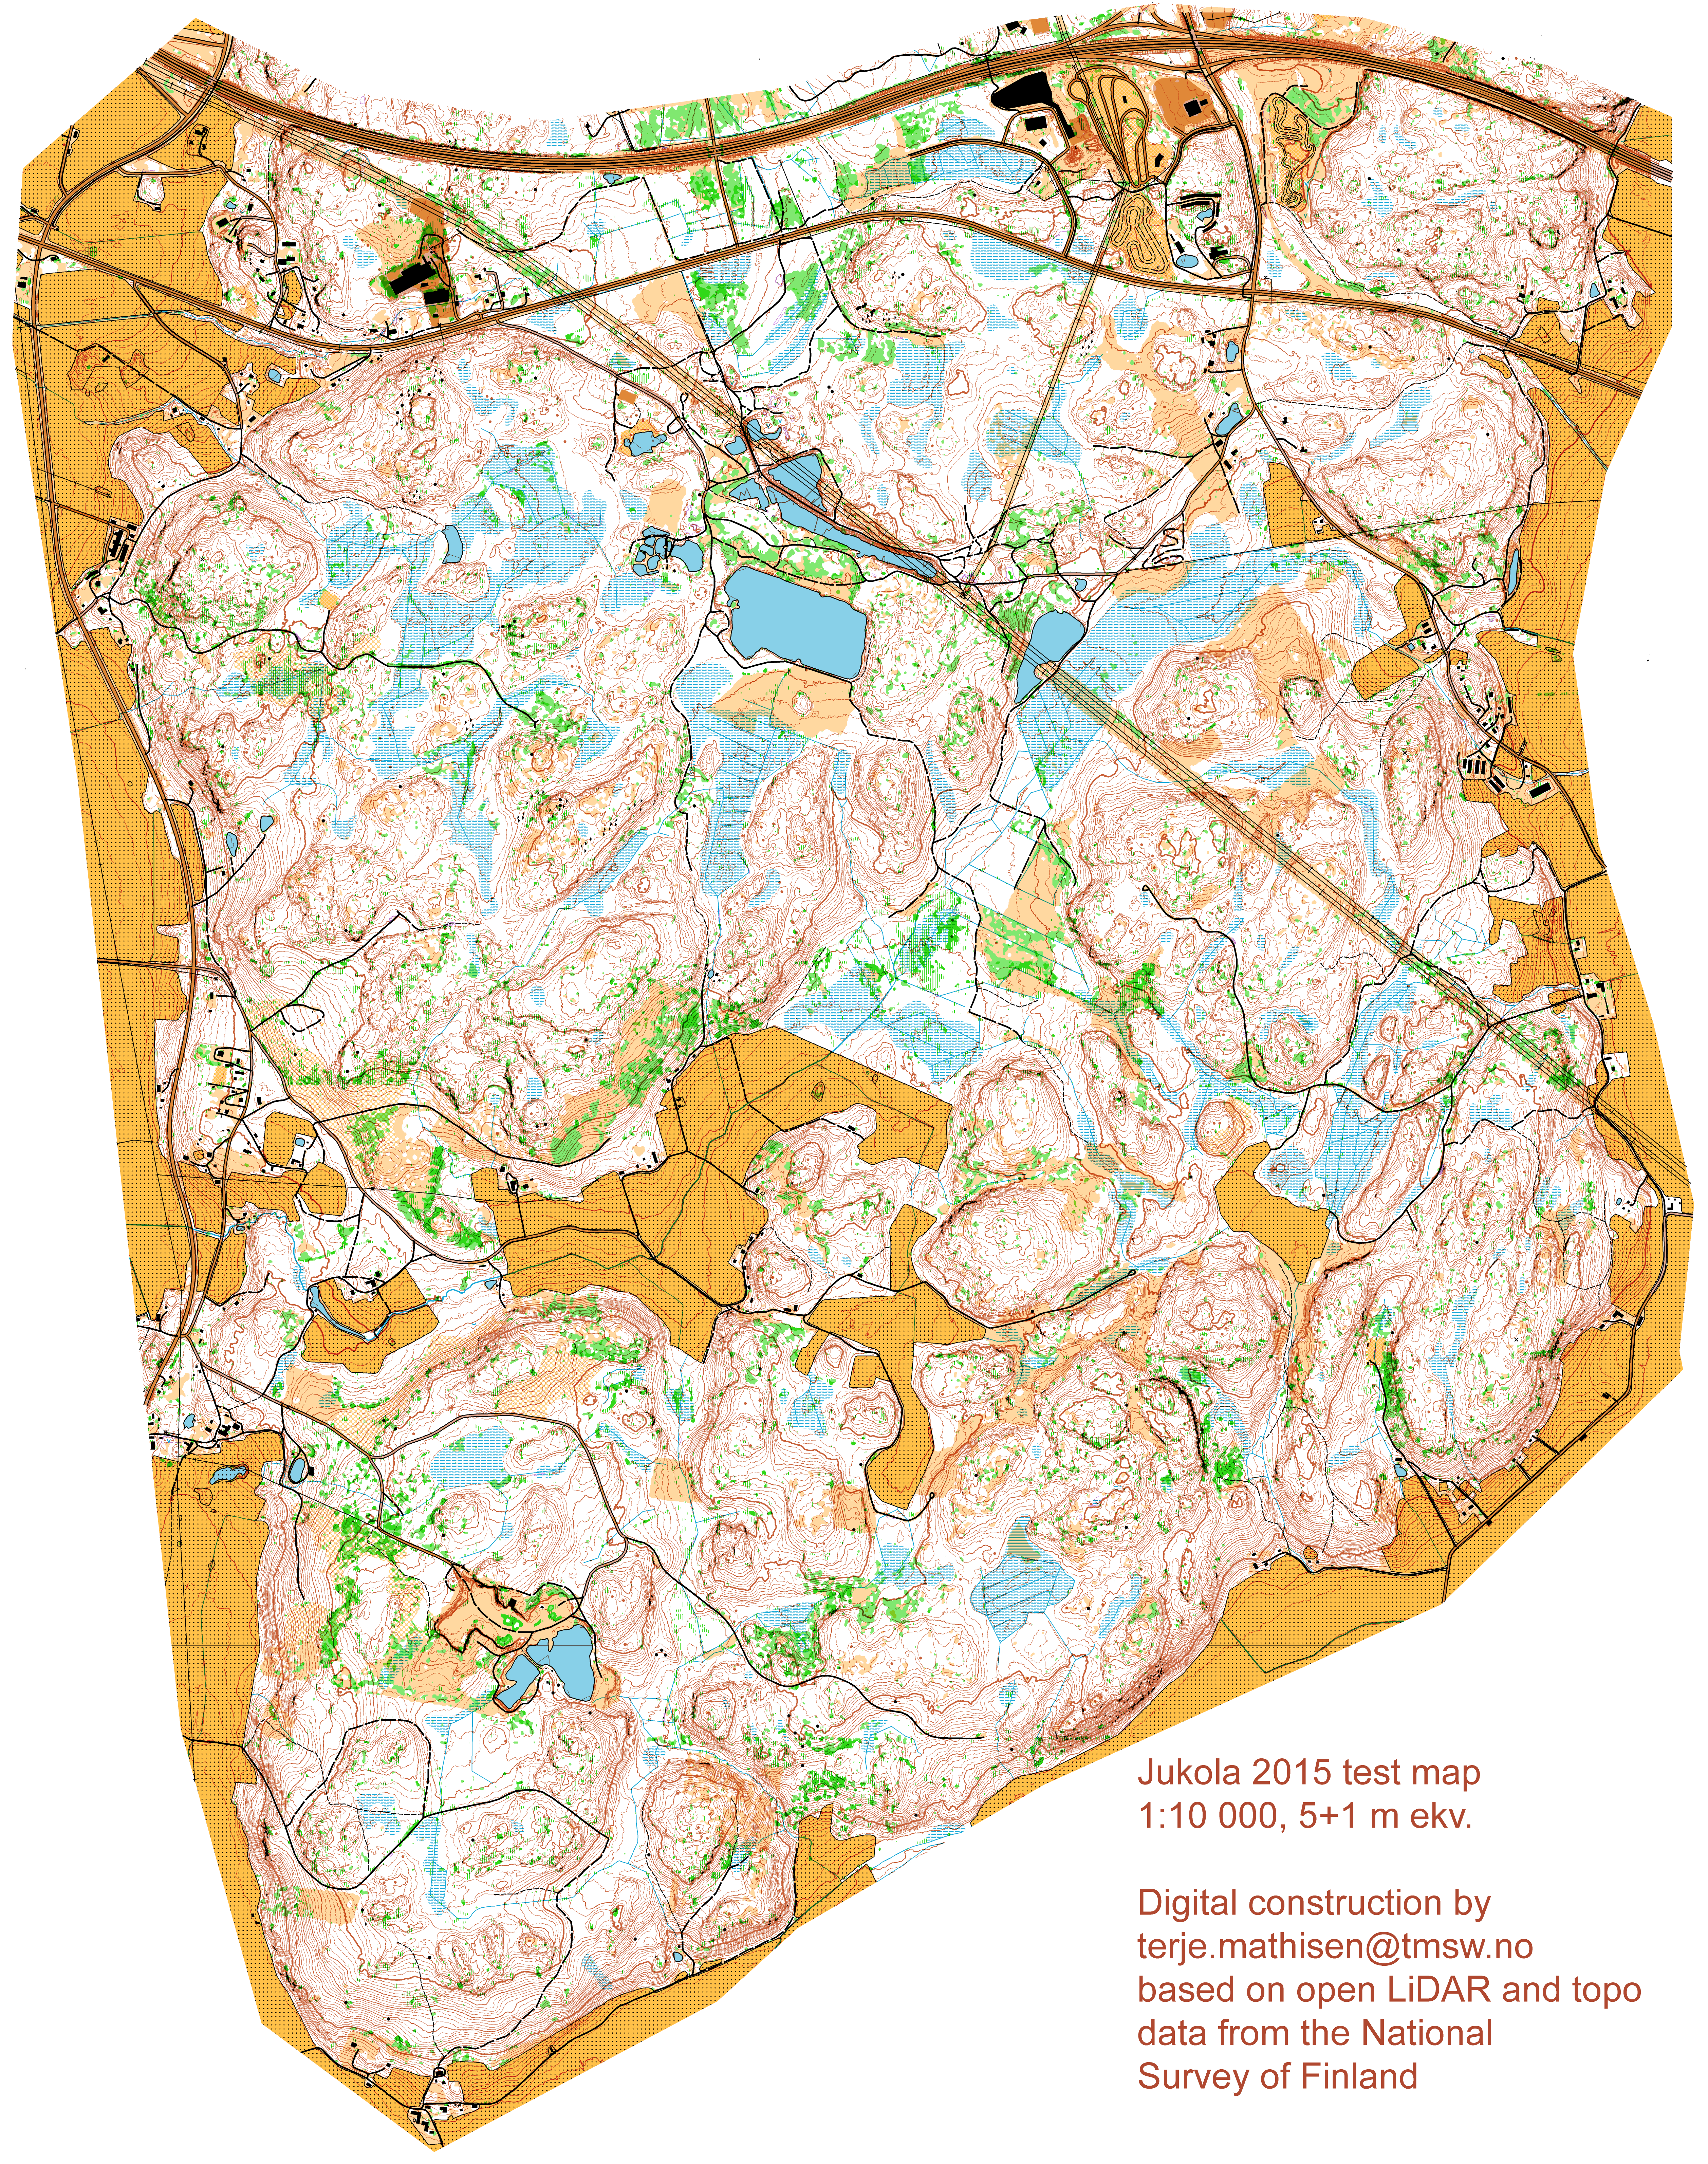 Jukola 2015 test map ver 2 (19.06.2014)